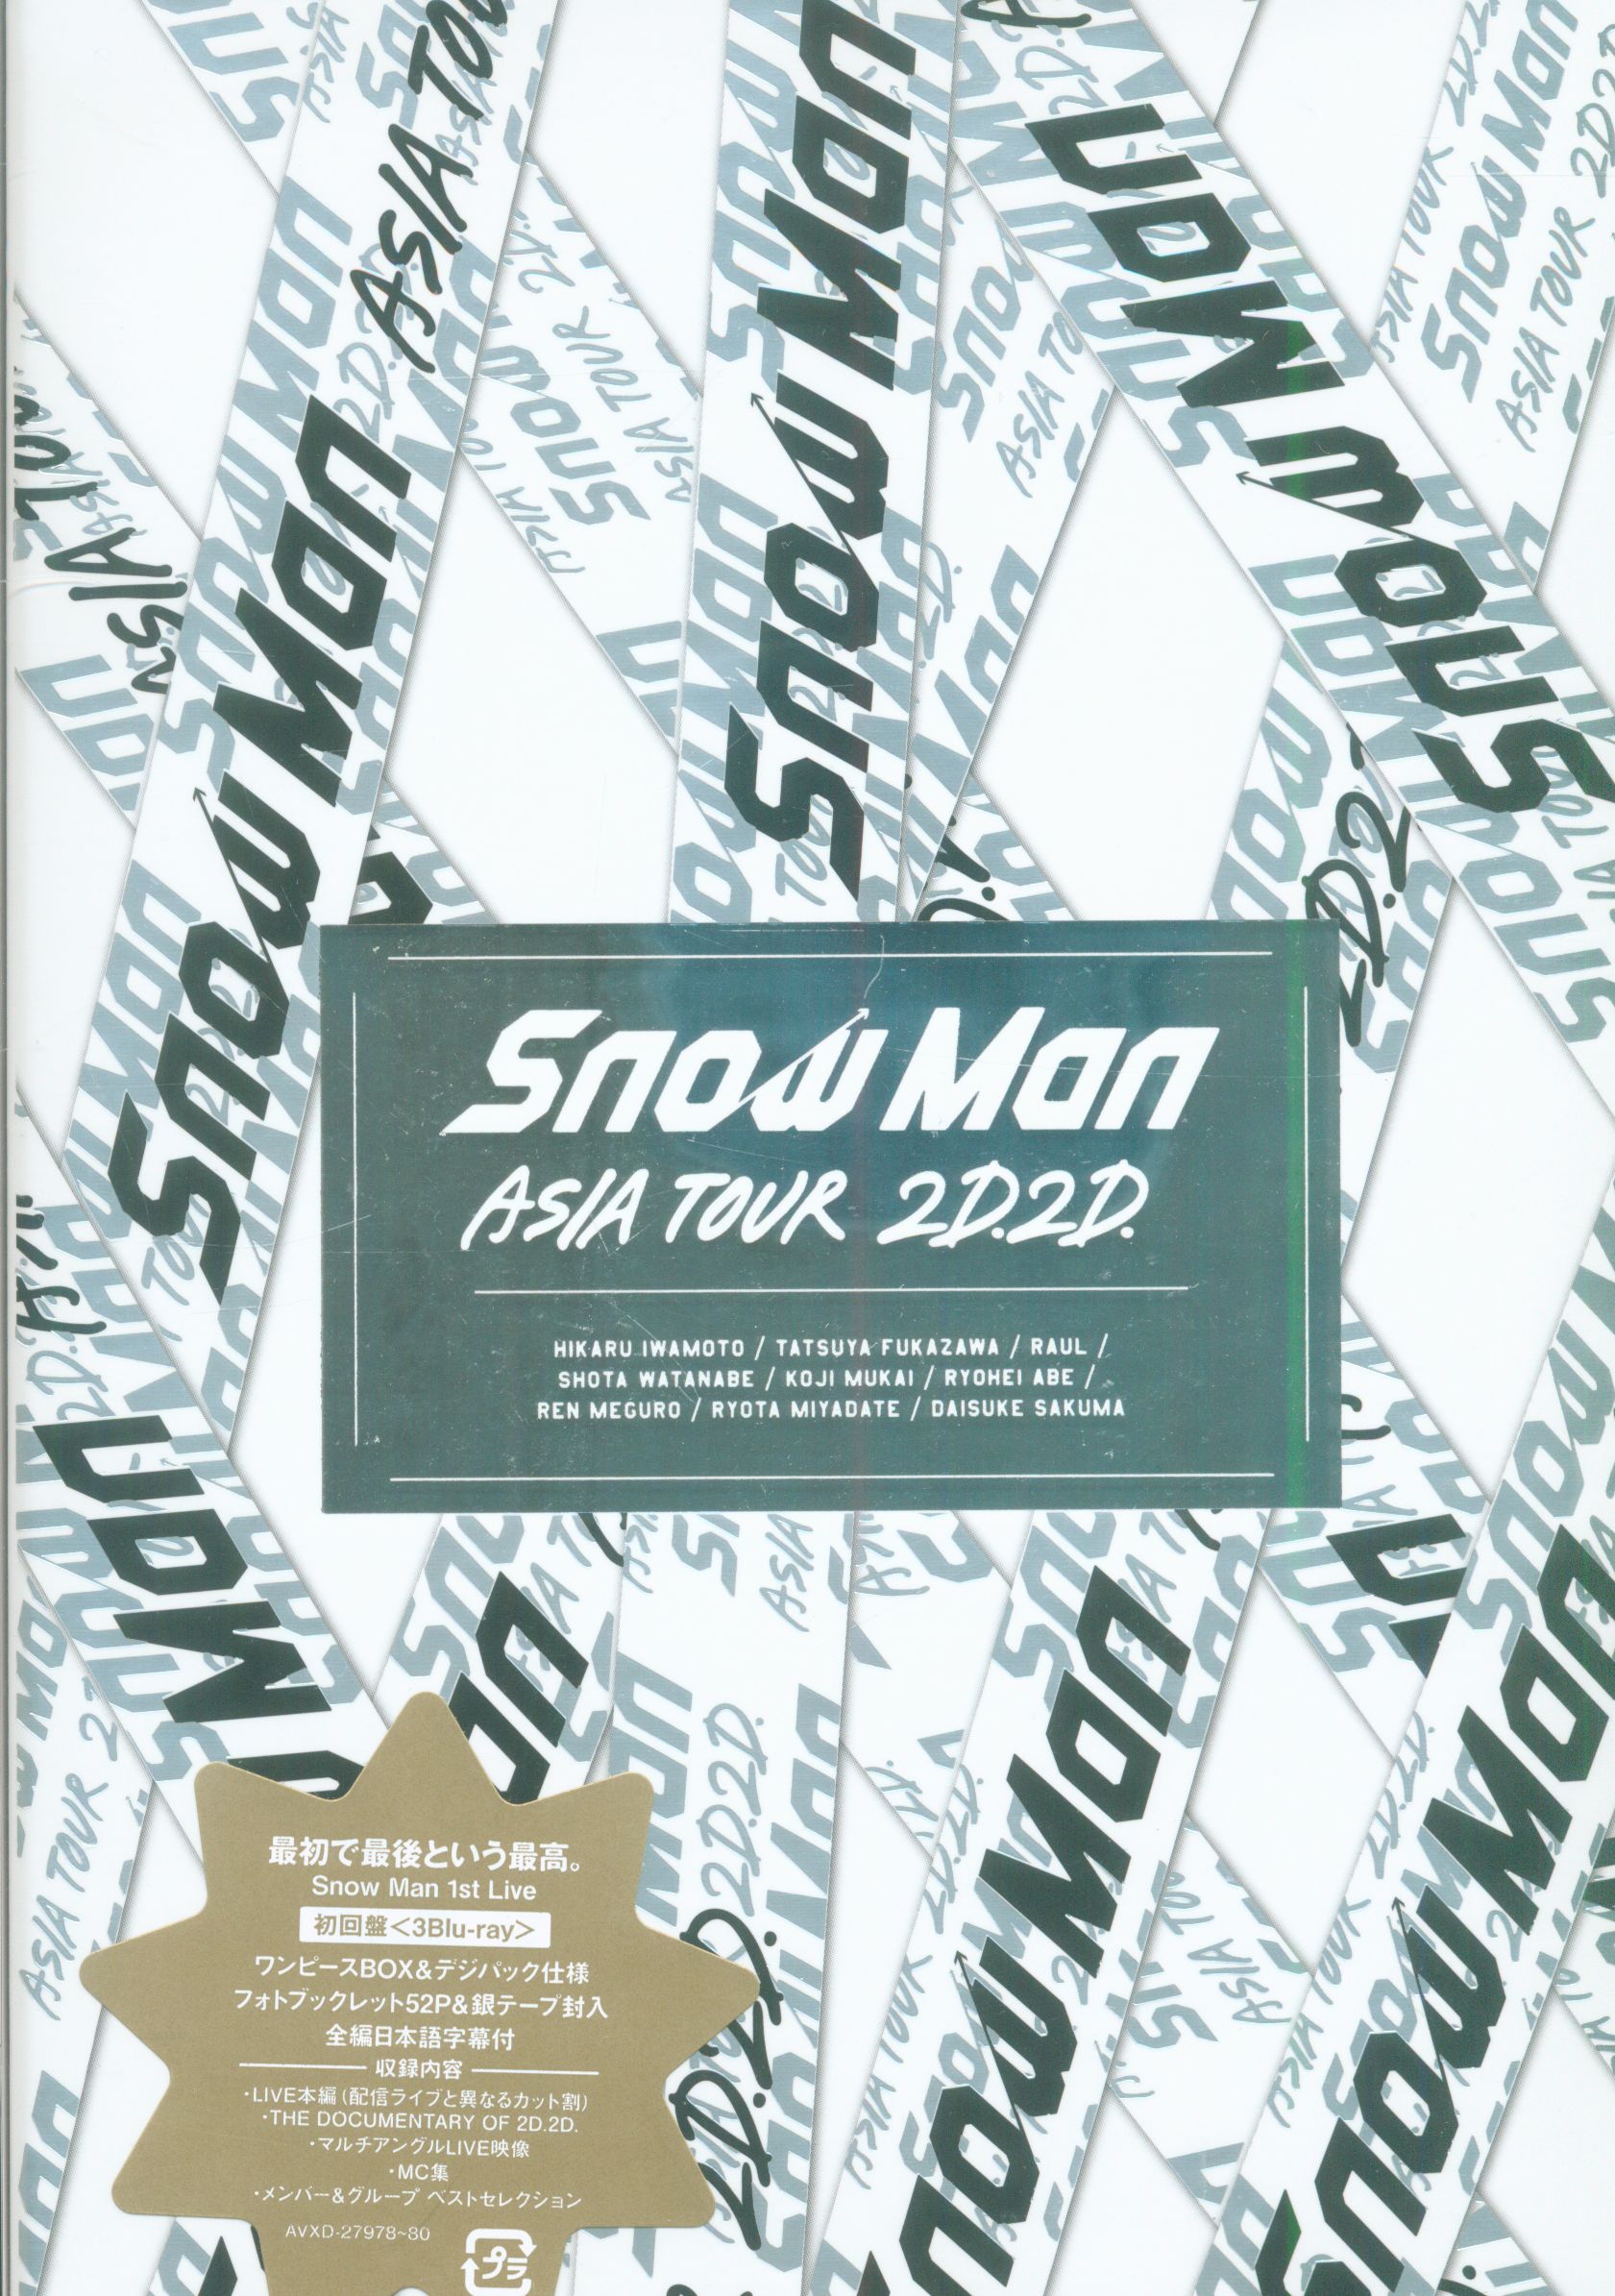 SnowMan Blu-ray First Edition Limited Ed Disc 2D.2D. | MANDARAKE